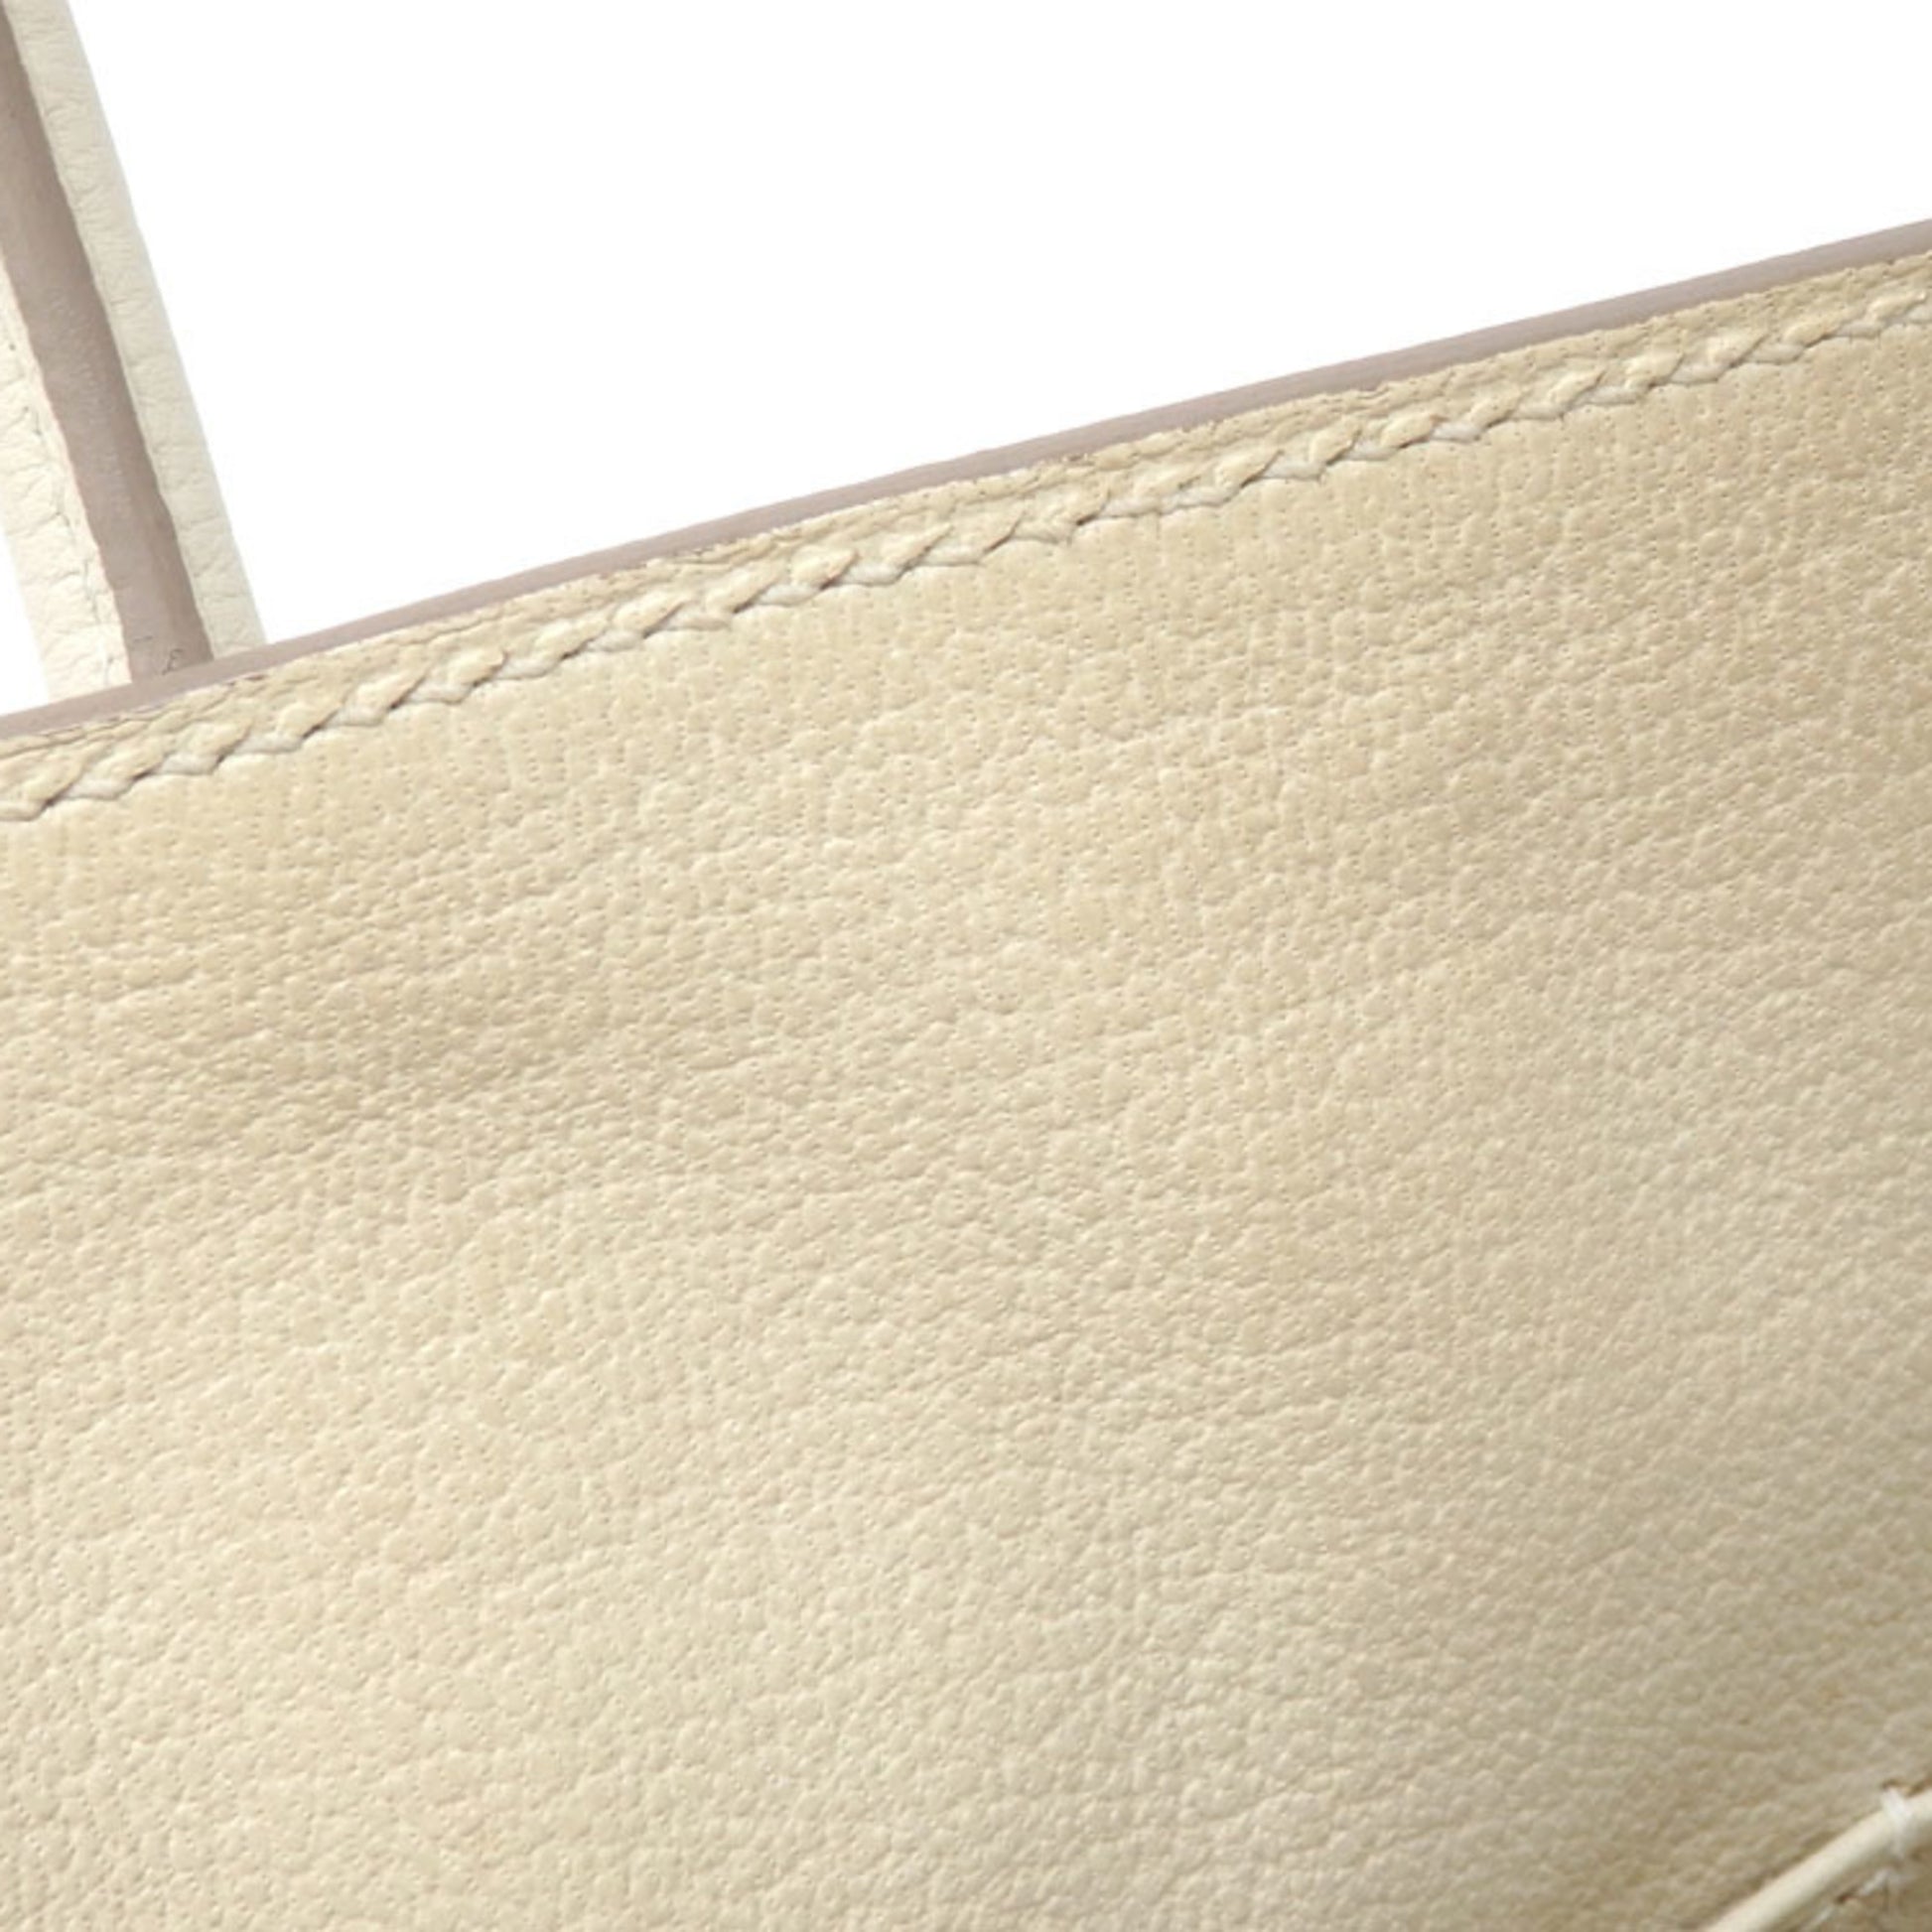 Hermès - Authenticated Birkin 25 Handbag - Leather Grey for Women, Never Worn